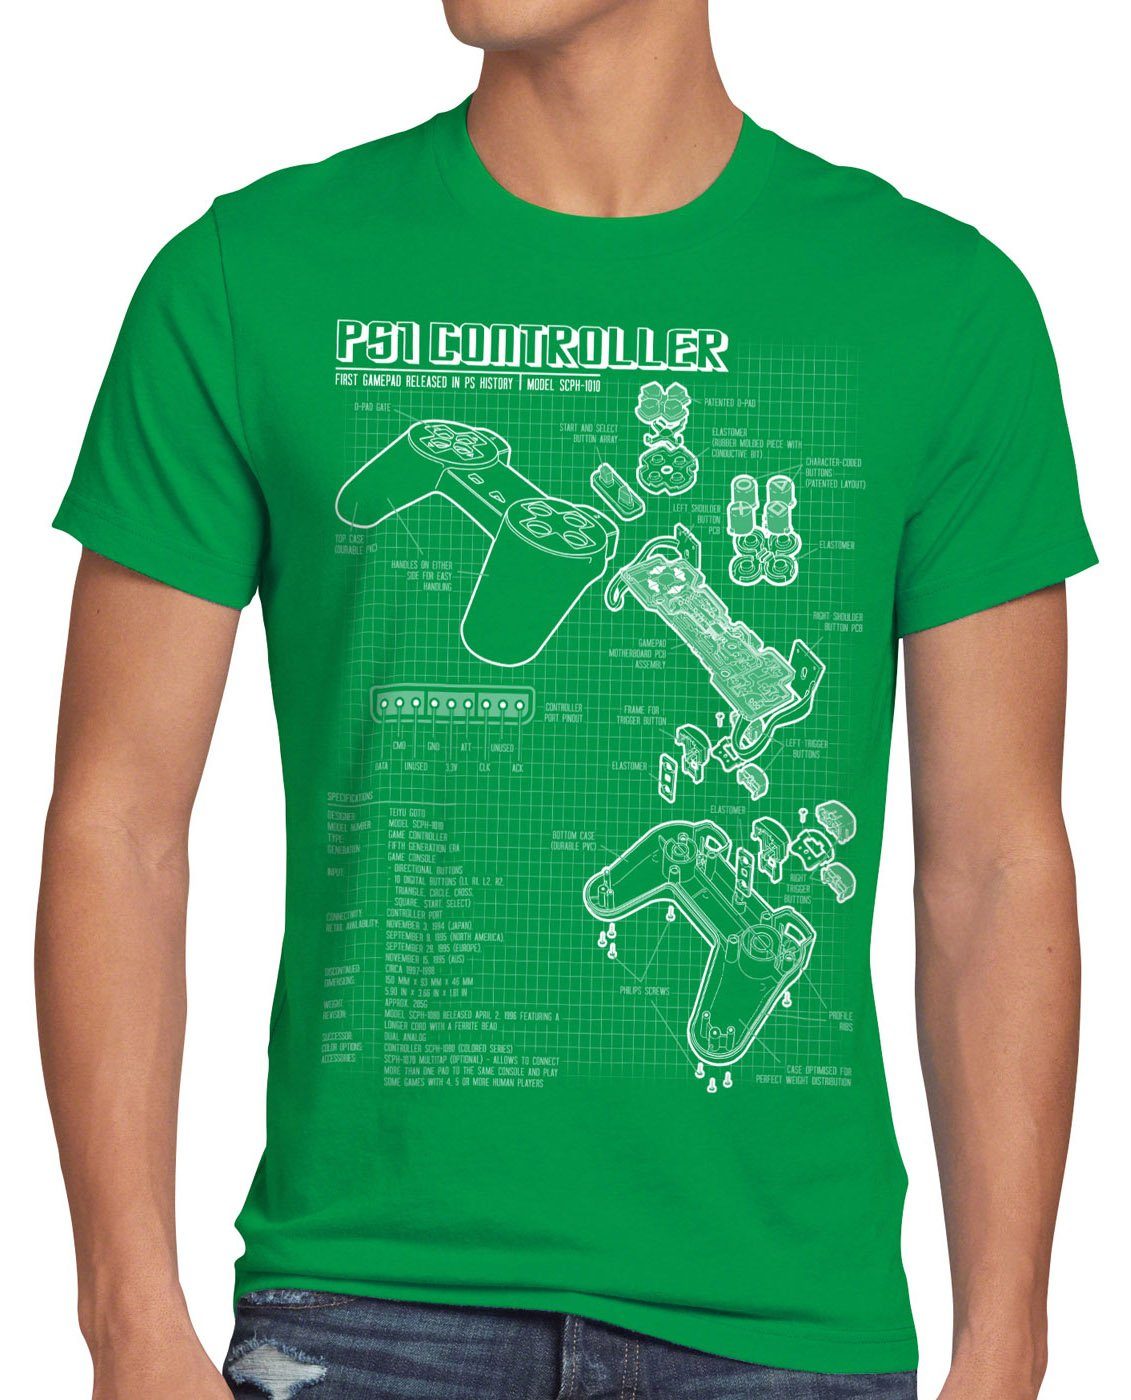 style3 Print-Shirt Herren T-Shirt gamepad konsole gamer grün Blaupause classic Controller PS1 PS